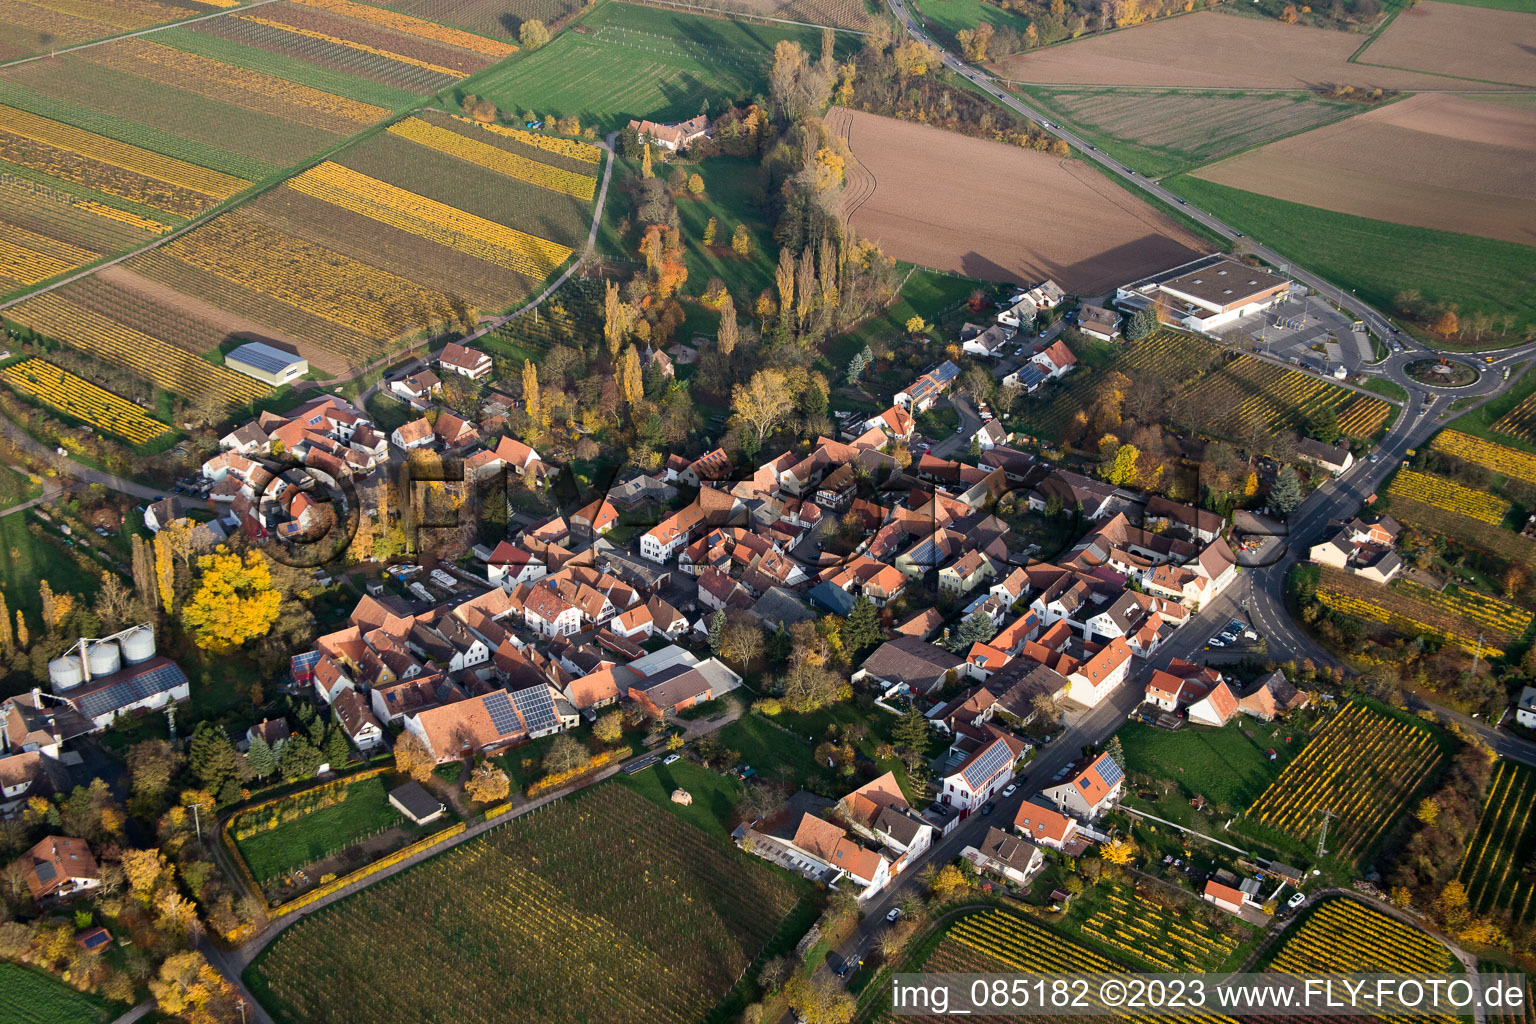 District Appenhofen in Billigheim-Ingenheim in the state Rhineland-Palatinate, Germany viewn from the air